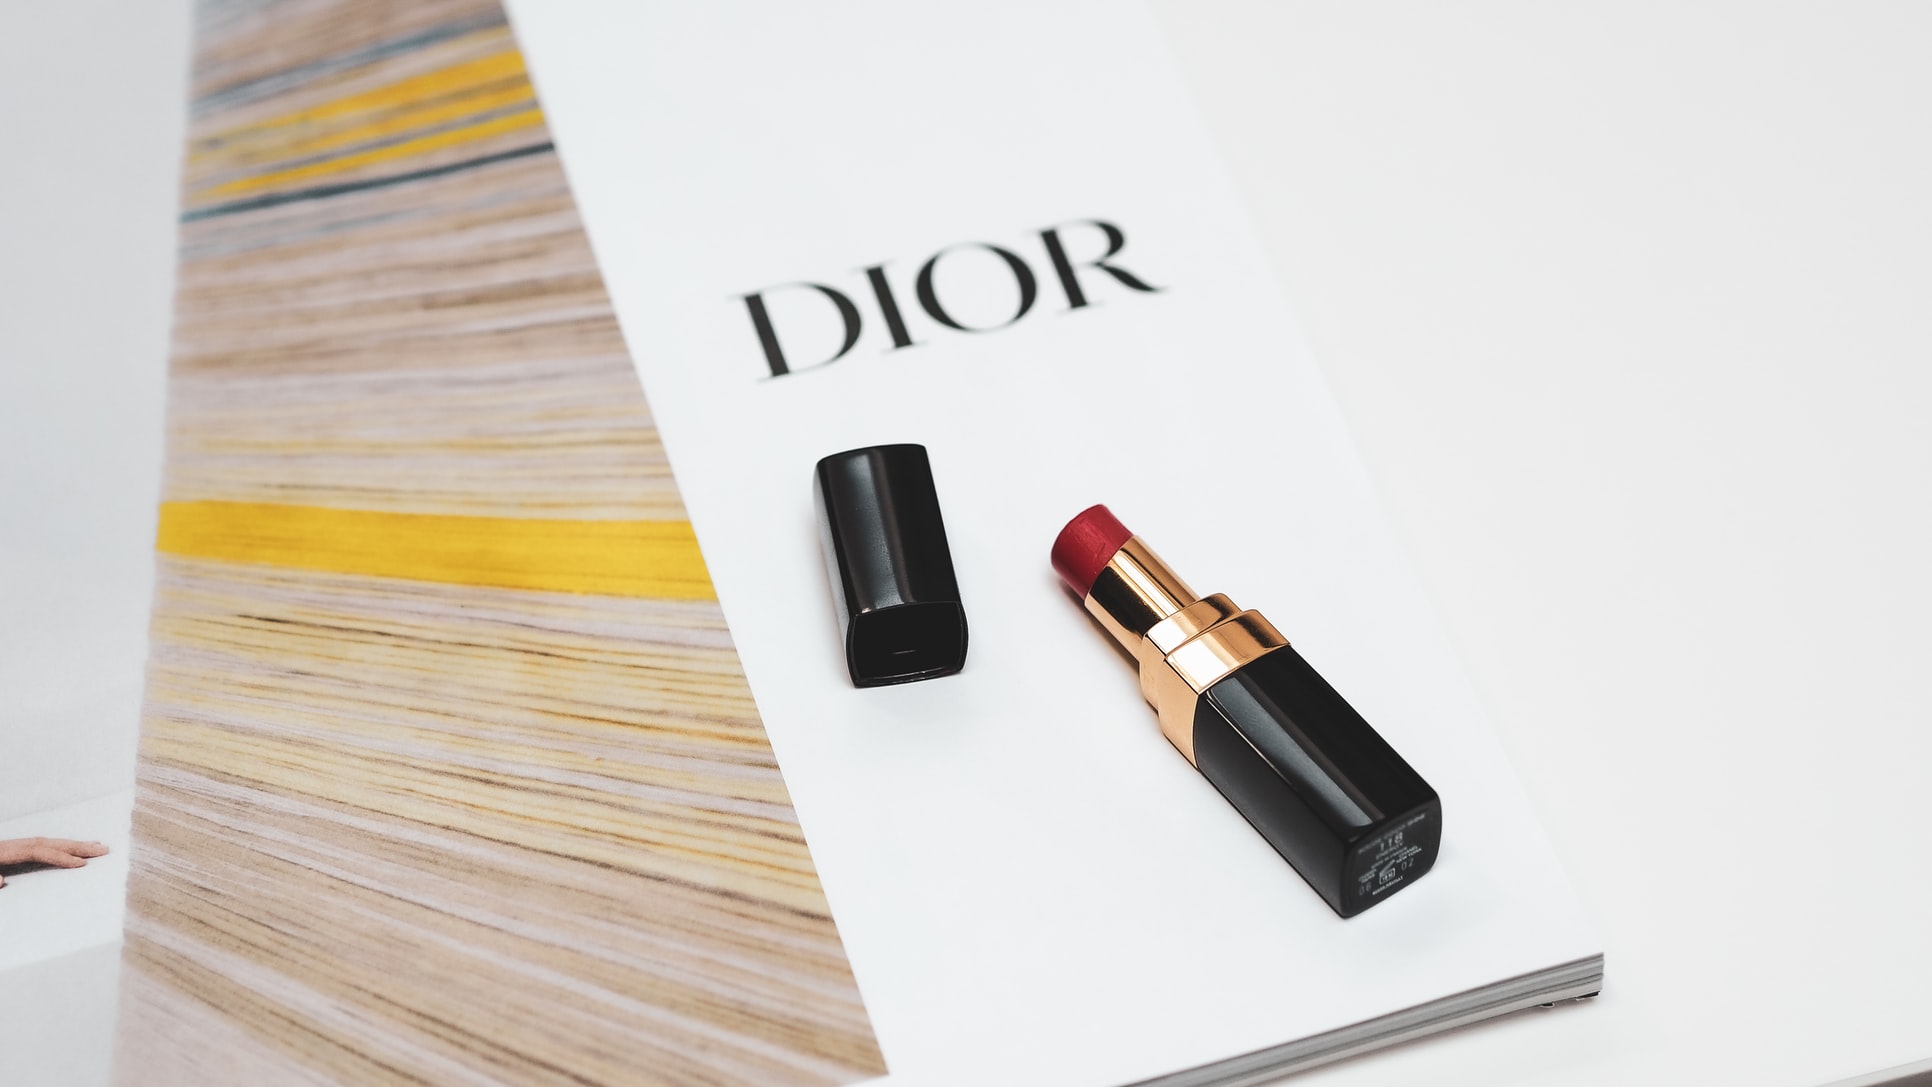 Christian Dior Marketing Strategy & Marketing Mix (4Ps)